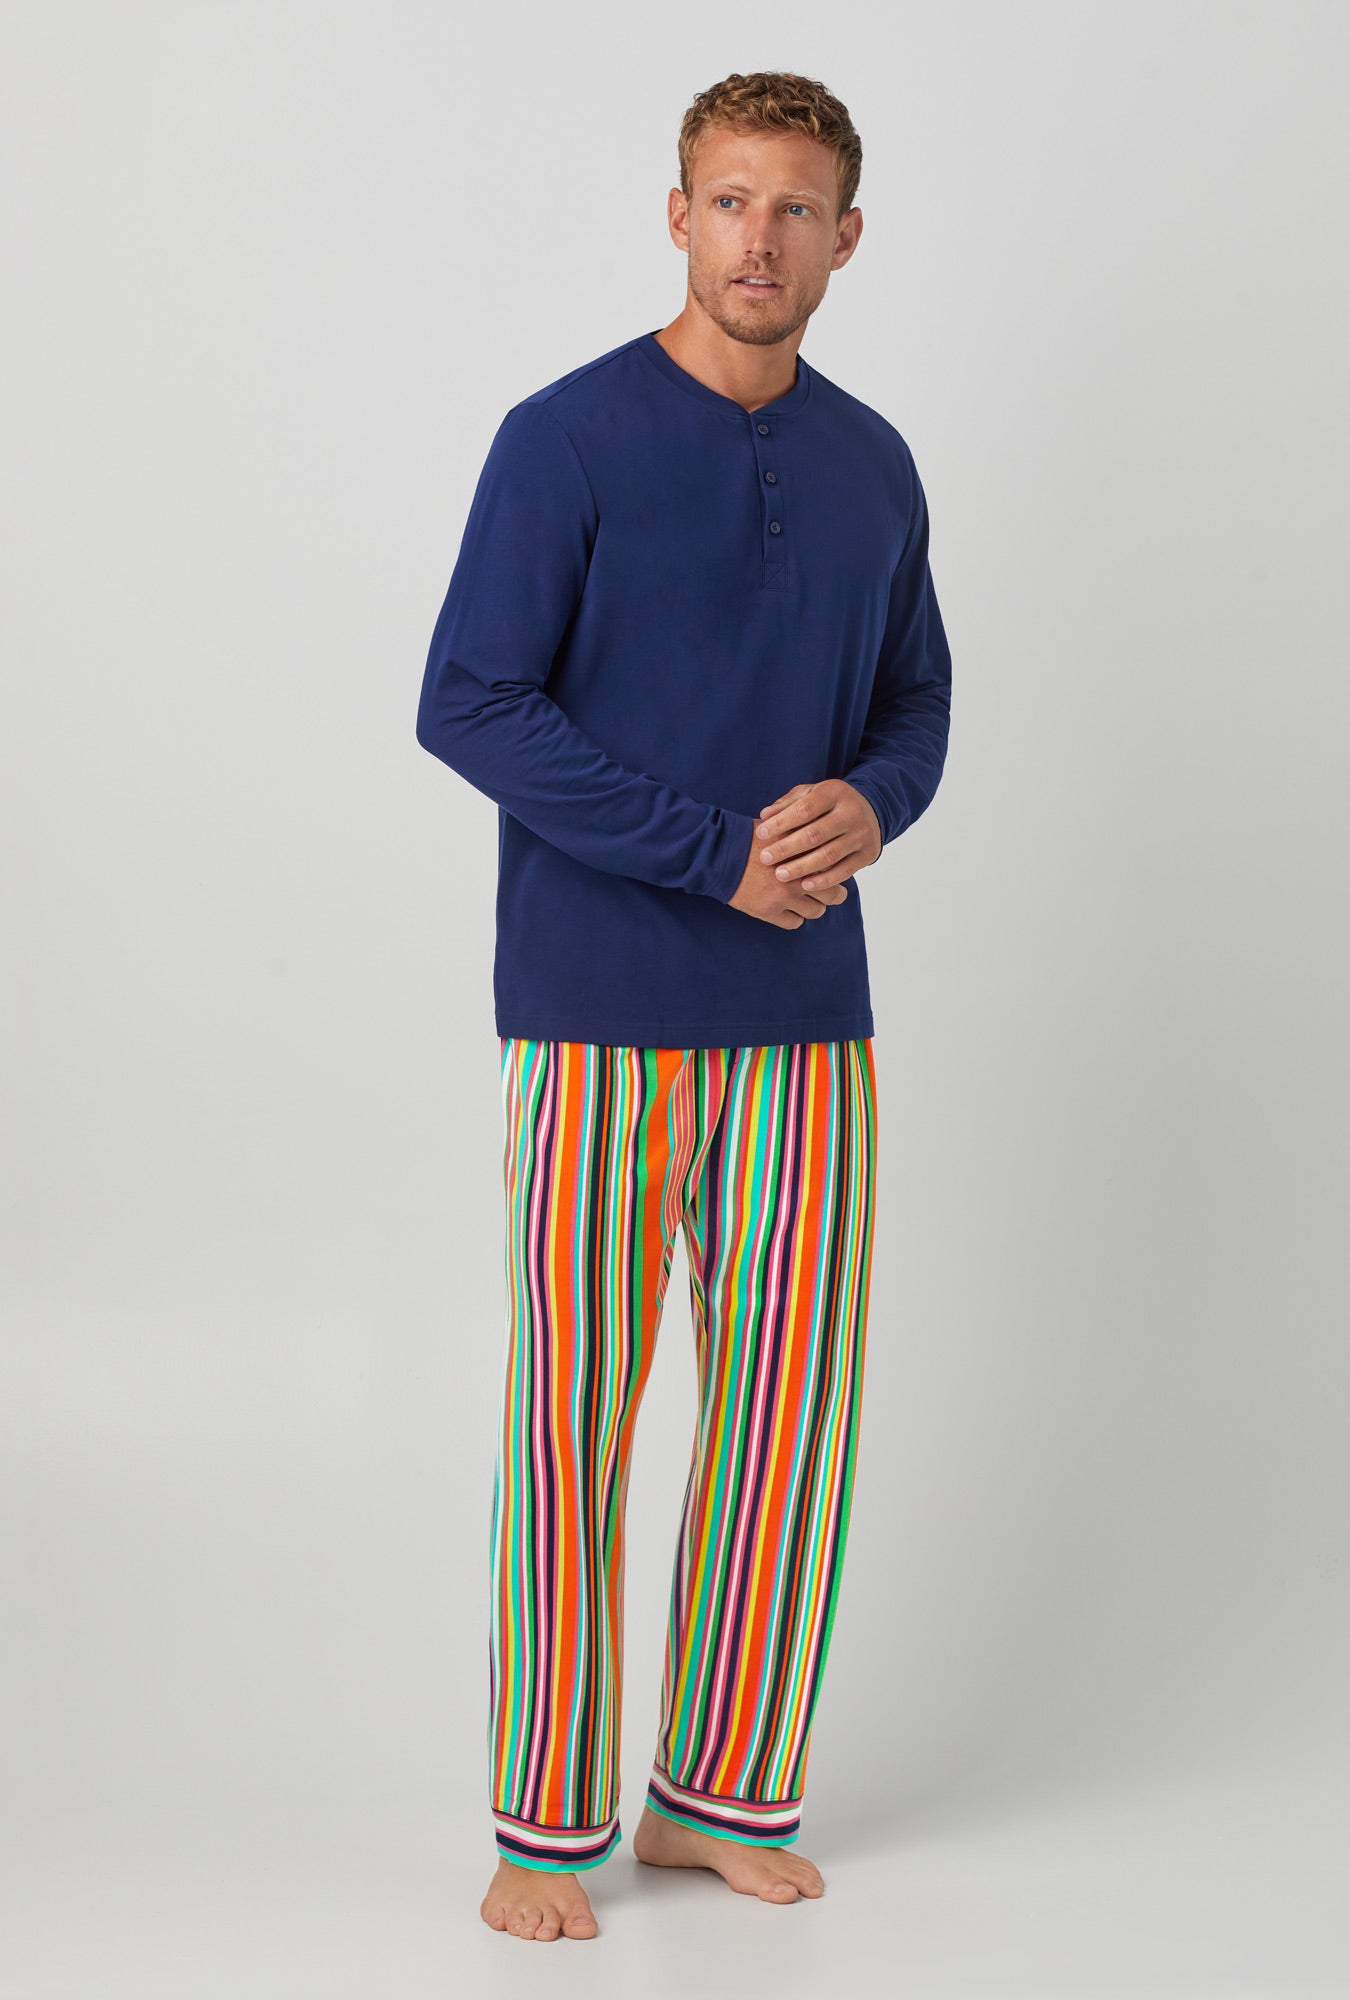 A man wearing Stripe Henley Stretch Jersey PJ Set